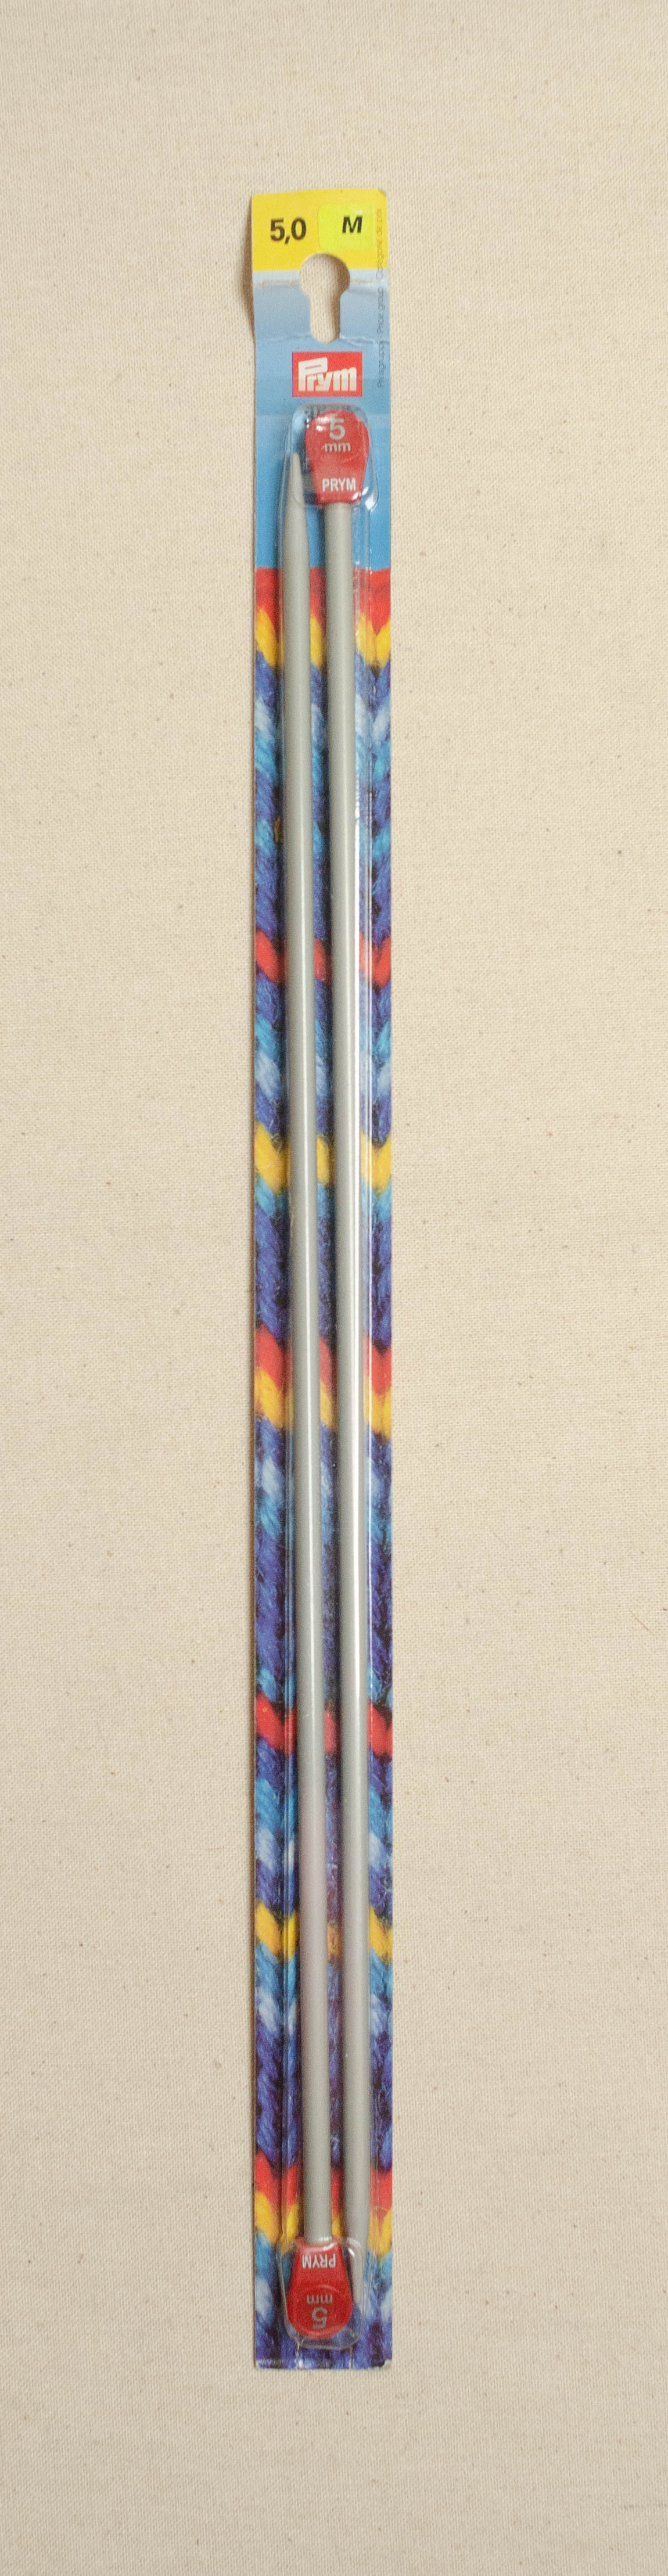 Prym 35cm Knitting Needles - 35cm X 5.0mm